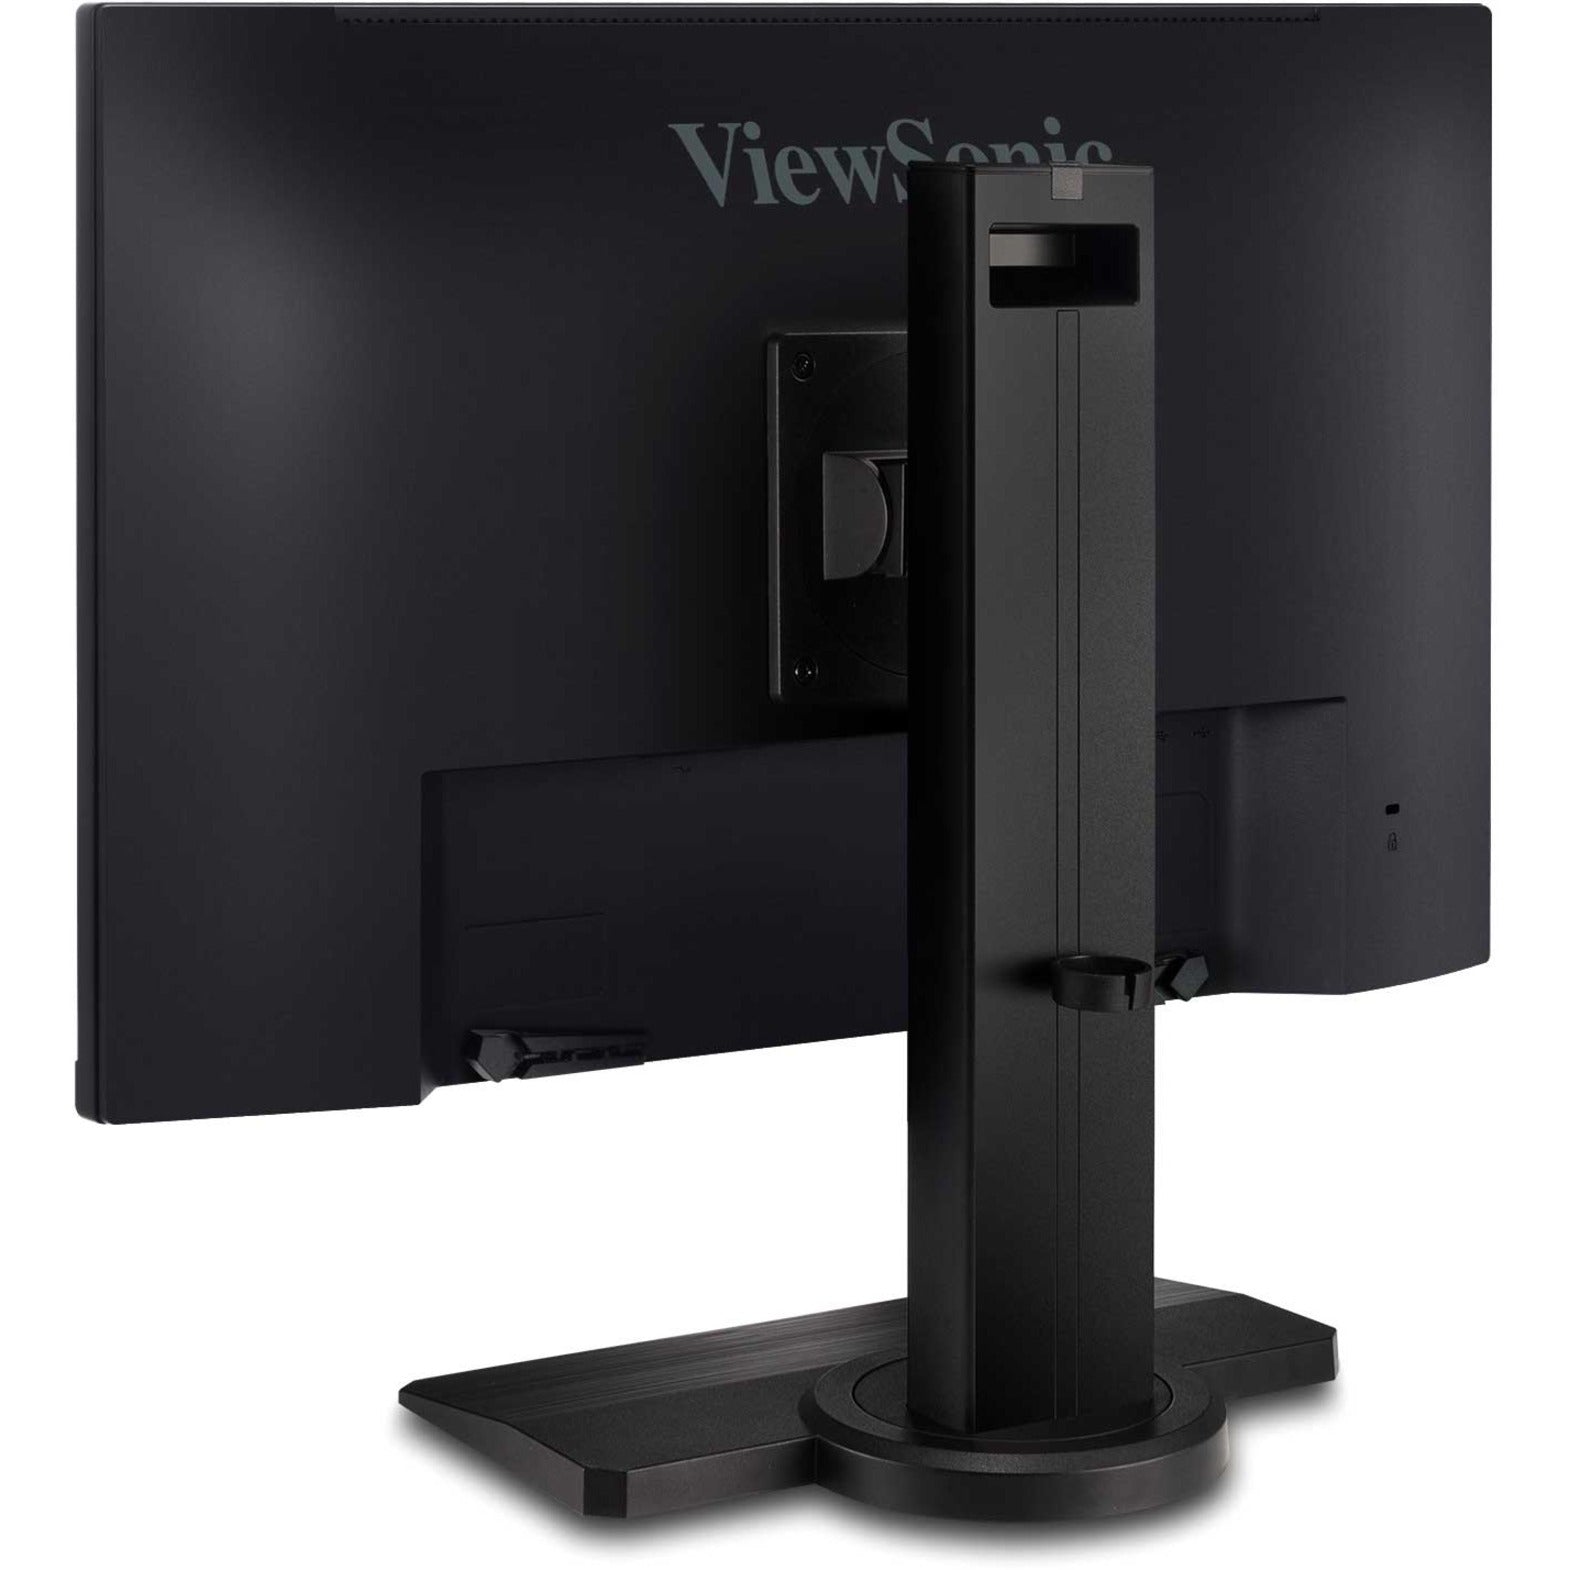 ViewSonic XG2431 Gaming Widescreen LCD Monitor, 24